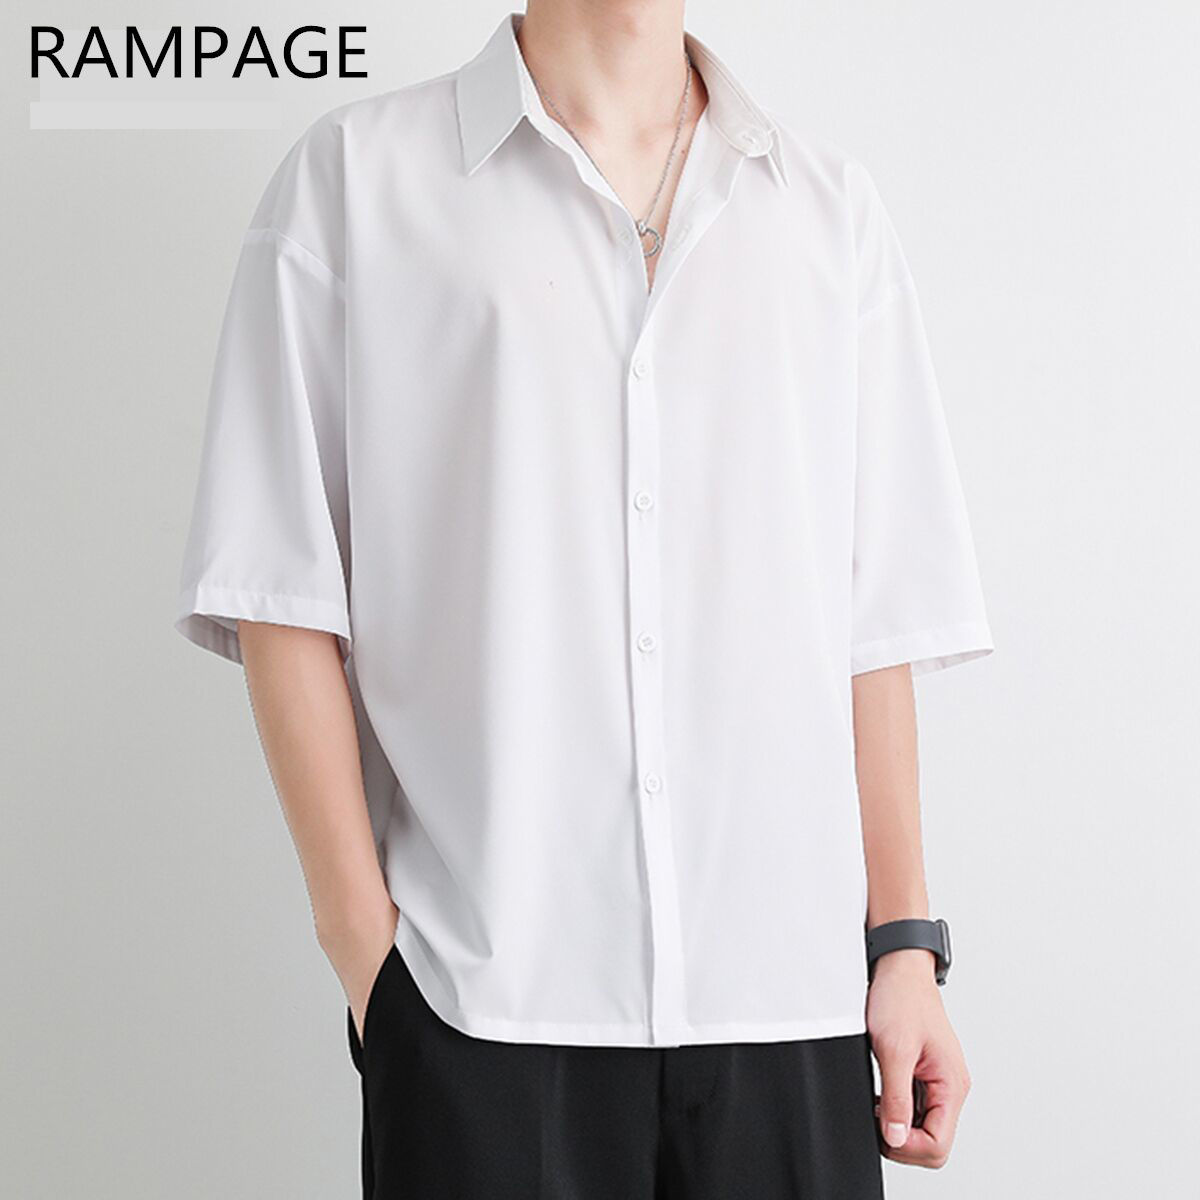 Rampage advanced drape ice silk shirt men's summer thin section business ruffian handsome design short-sleeved shirt jacket